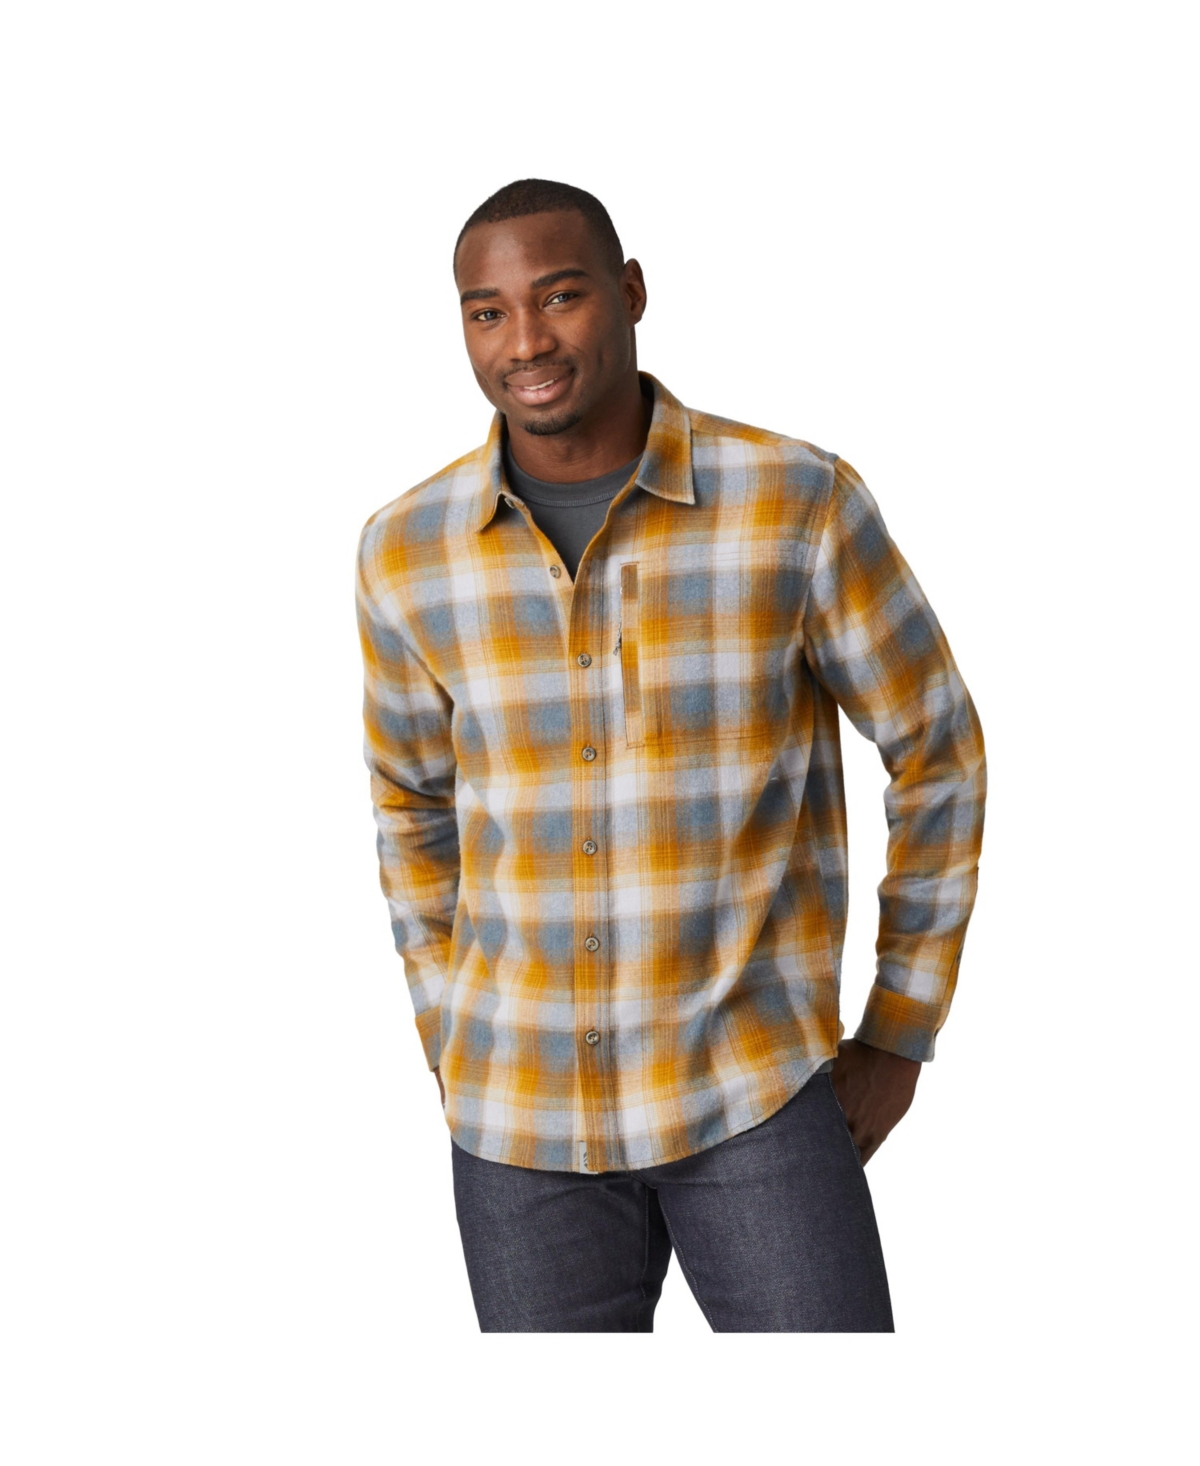 Men's Easywear Flannel Shirt Jacket - Canyon brown plaid